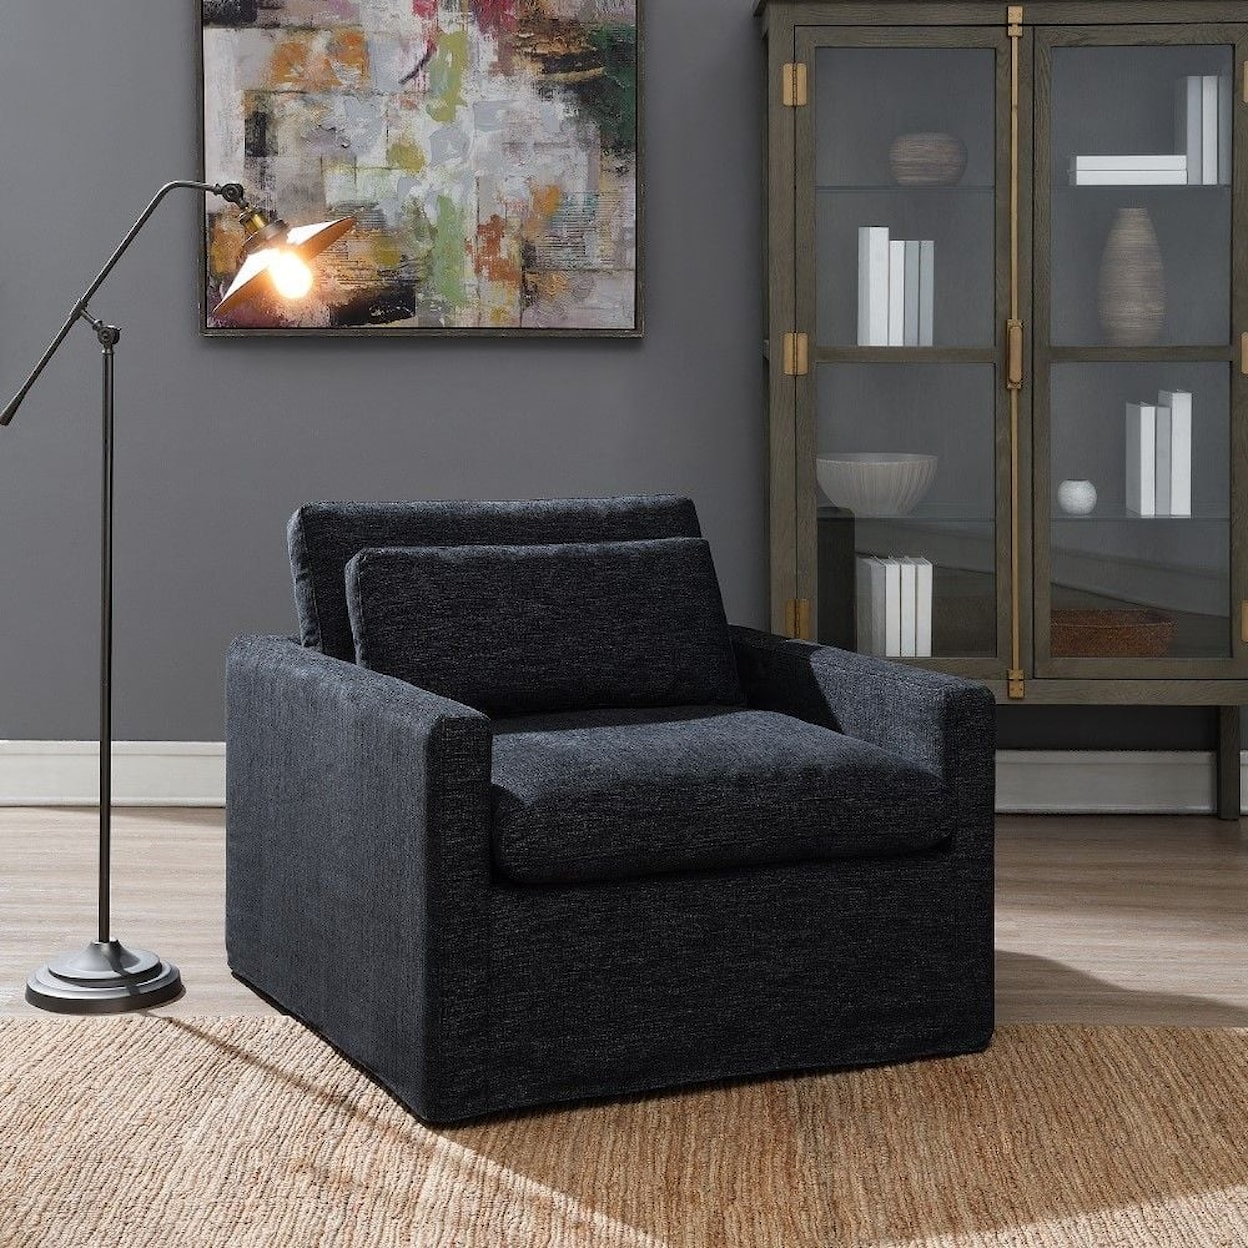 Acme Furniture Frederick Swivel Chair W/Pillow